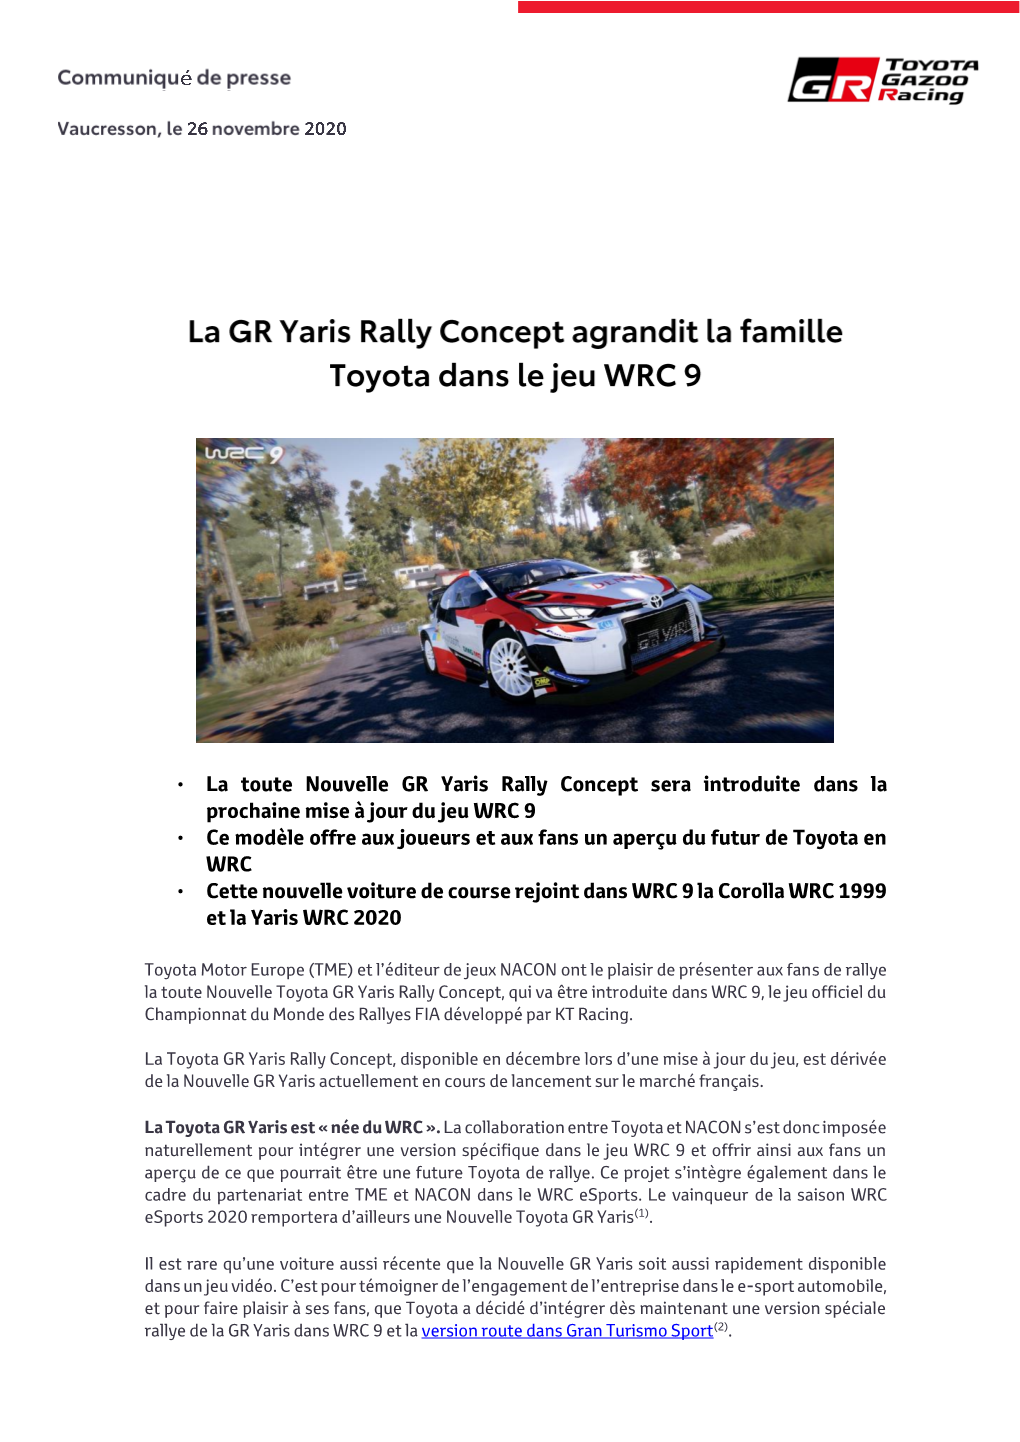 RP 2020-132 La GR Yaris Rally Concept Agrandit La Famille Toyota